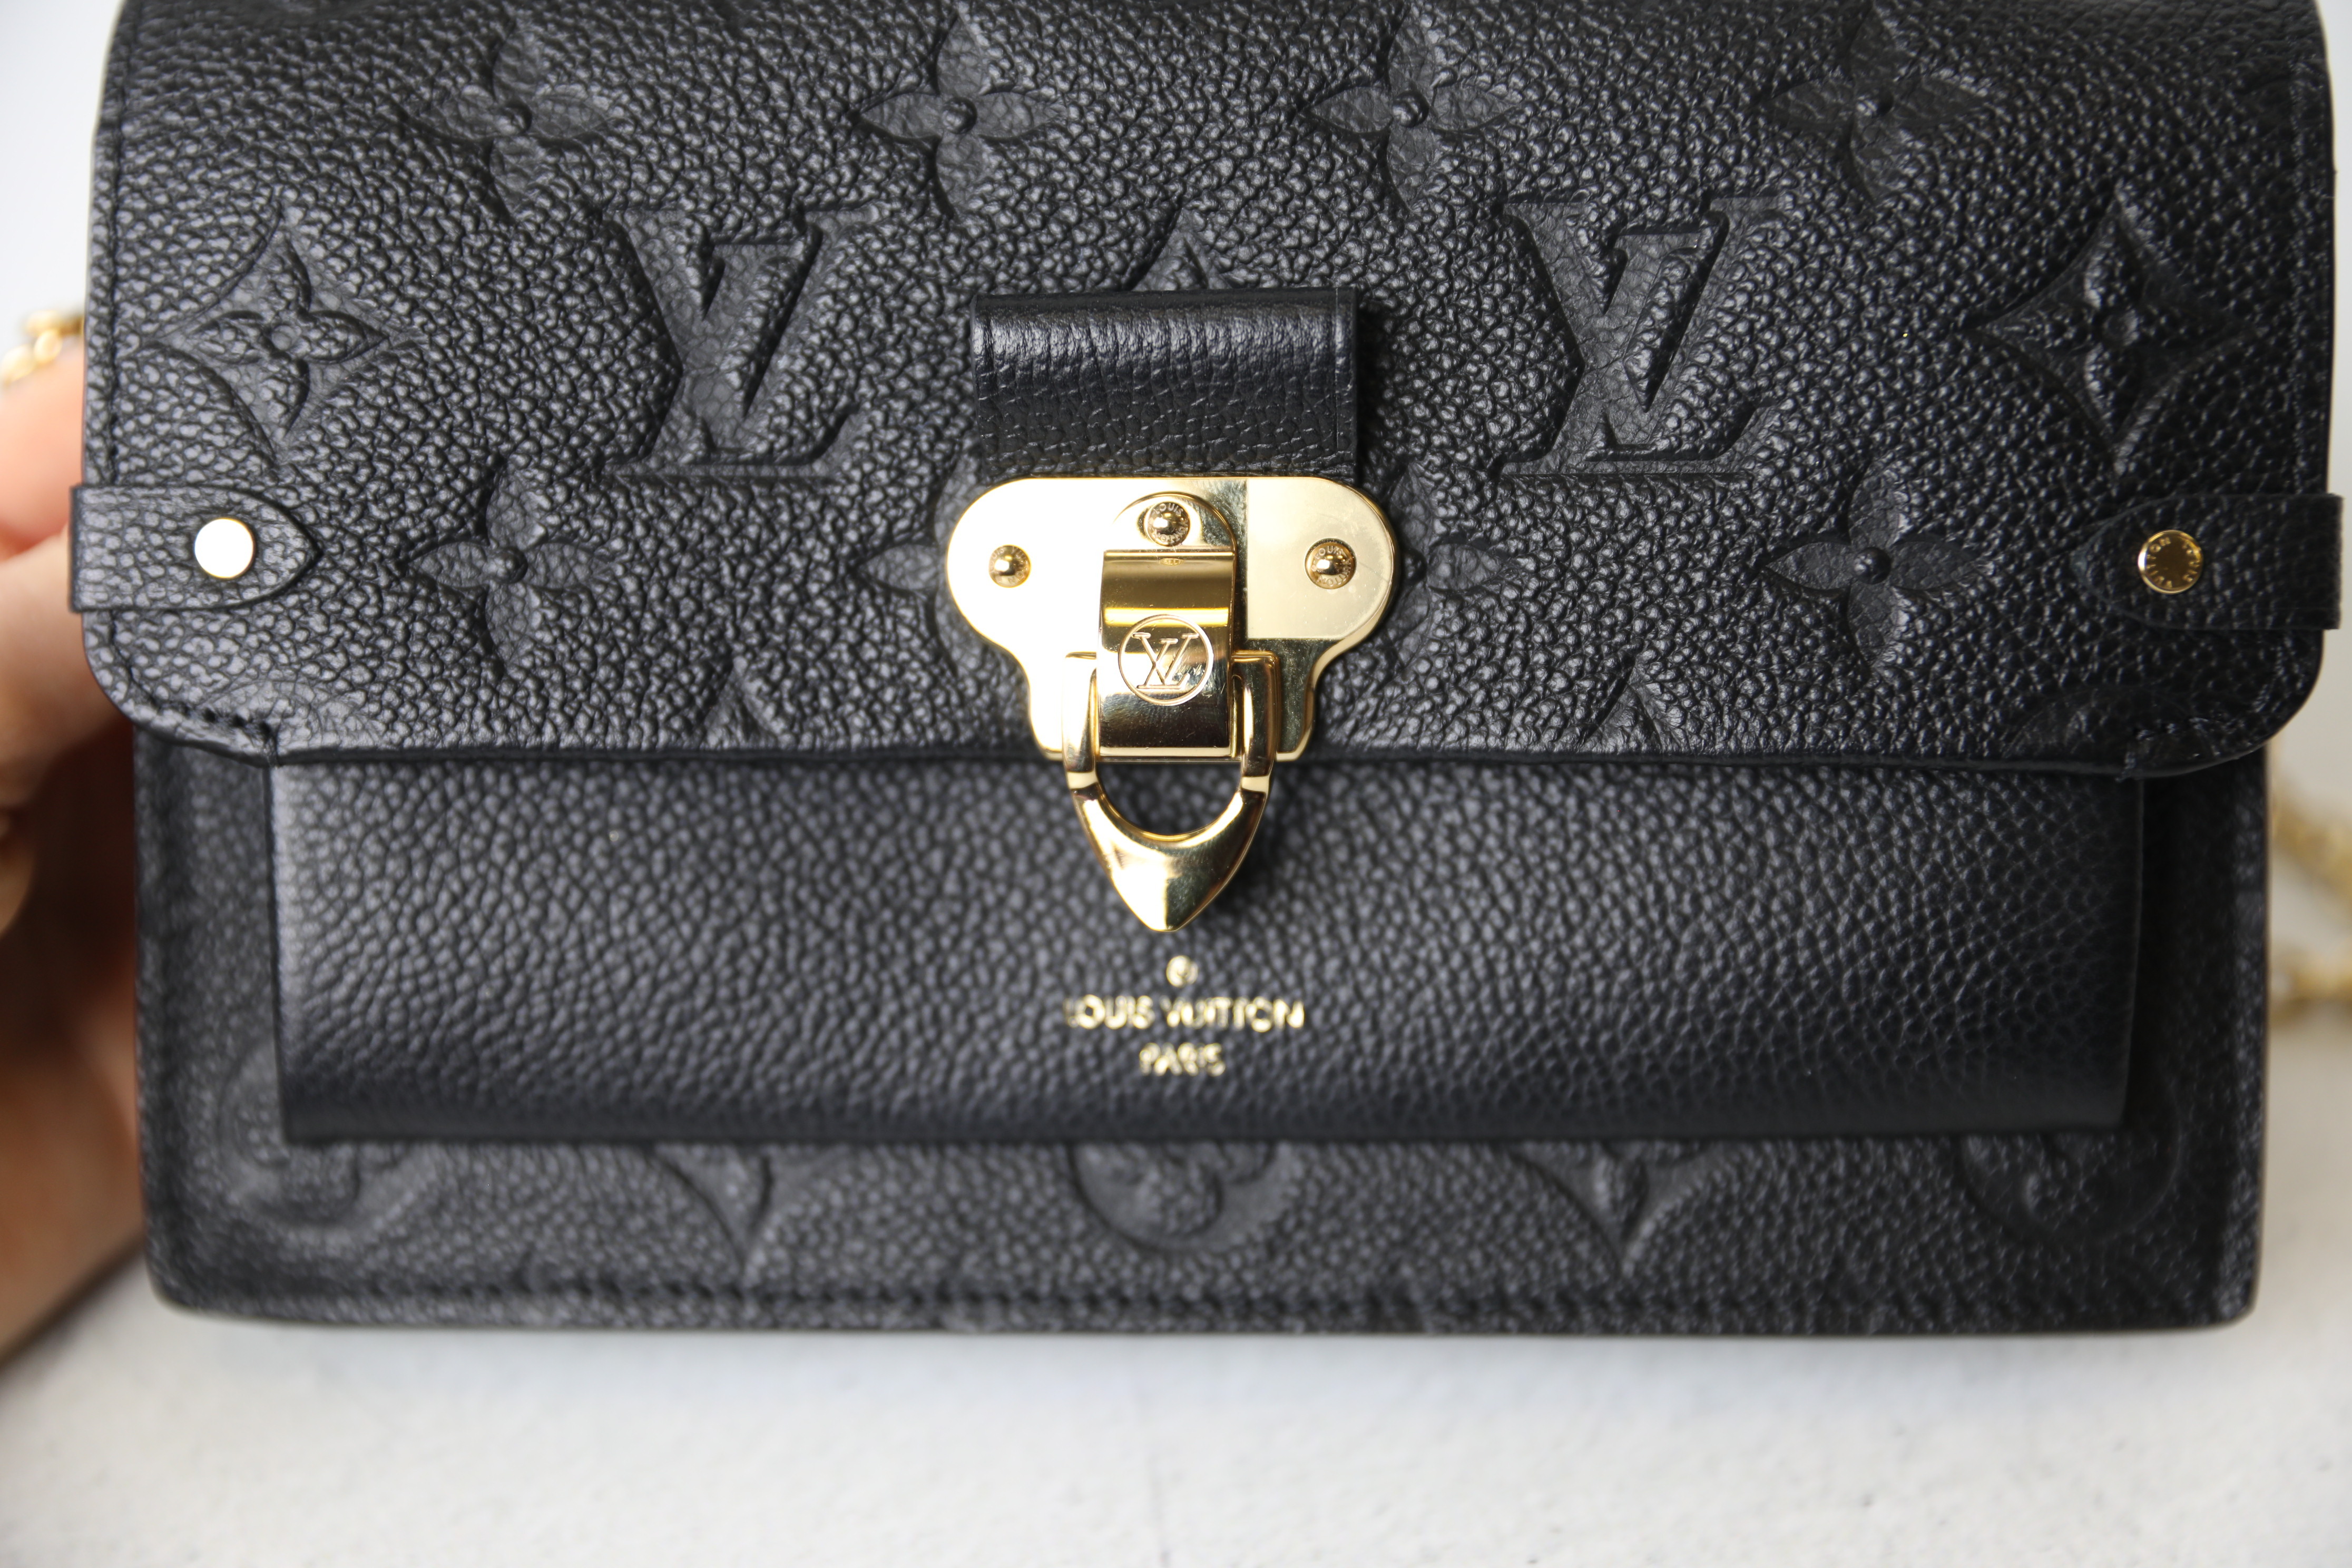 LV pochette Metis or Vavin PM - both in empreinte black leather